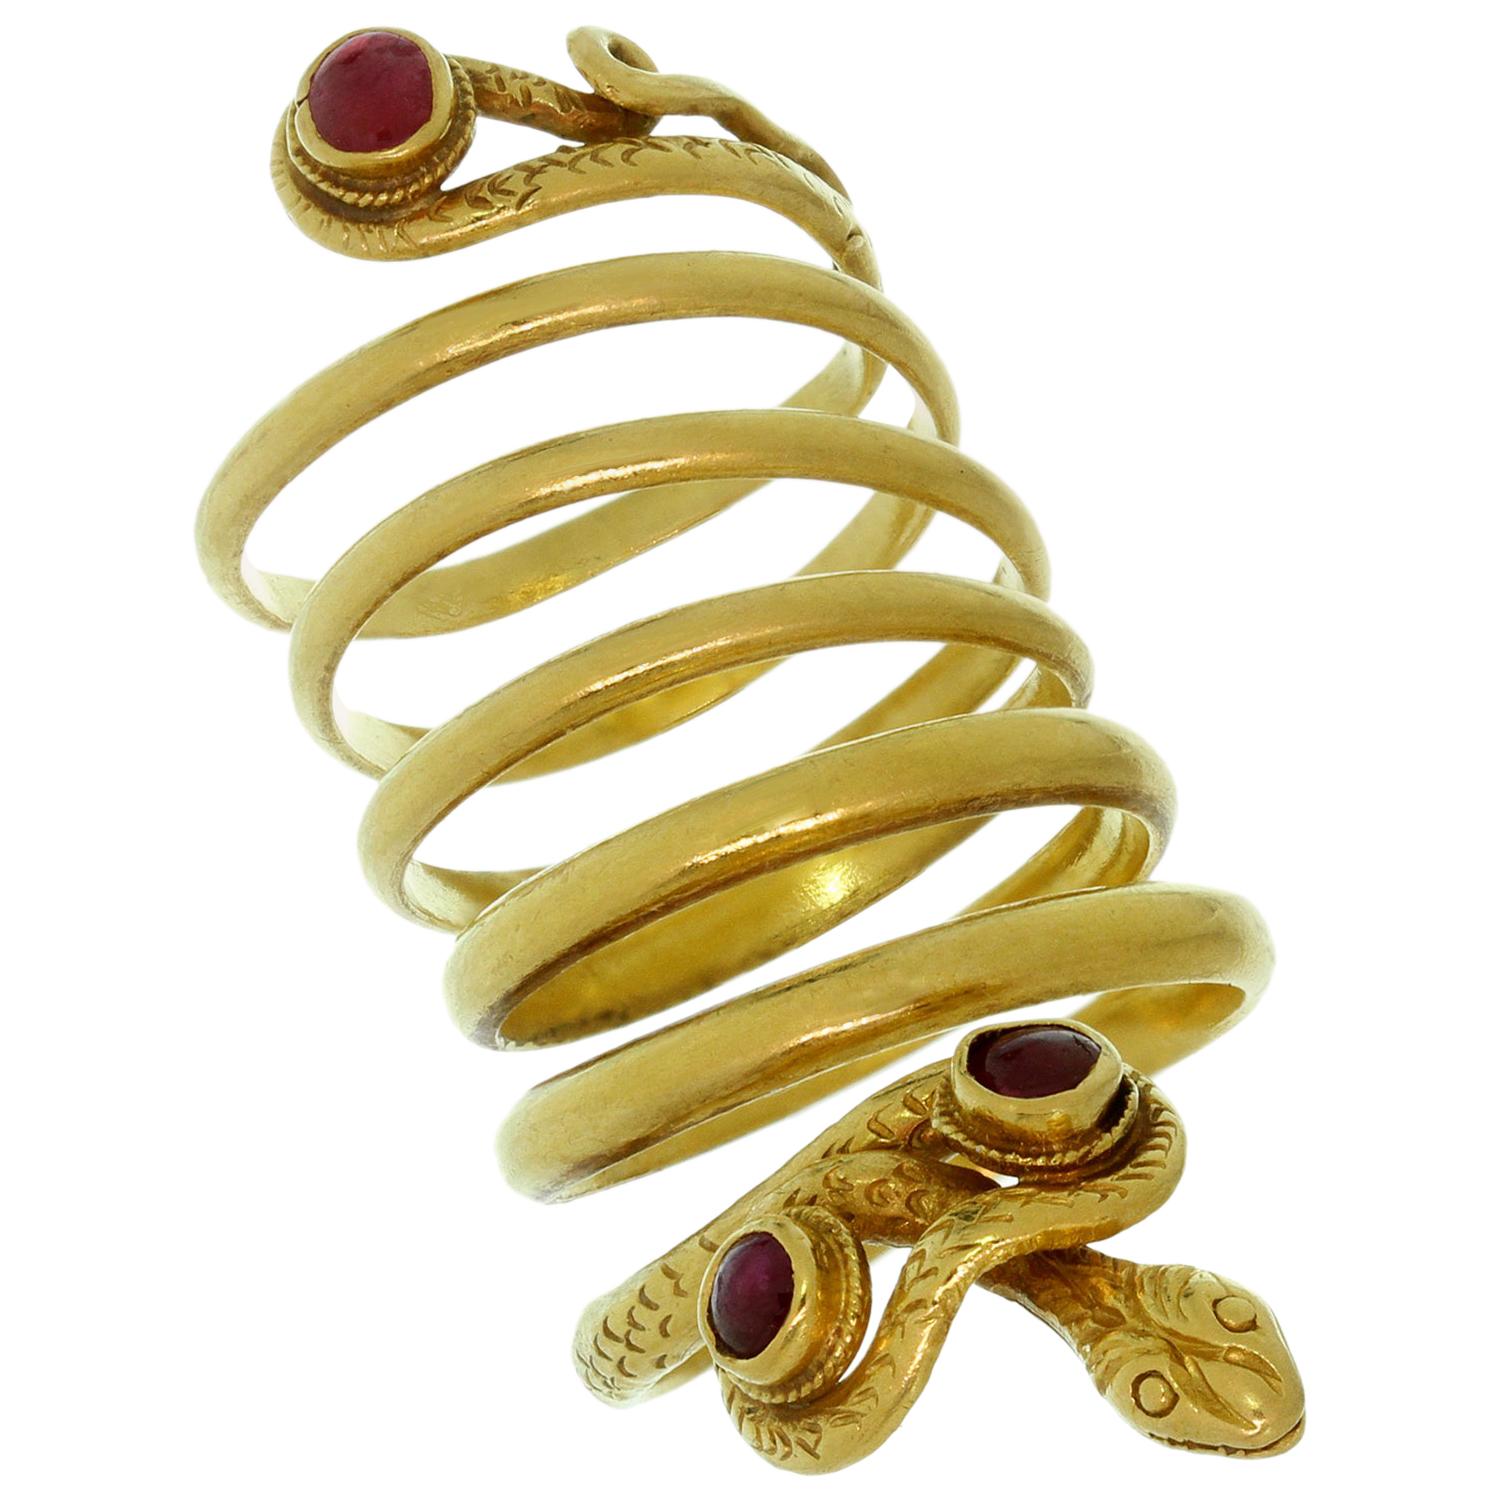 Zolatas Ruby 22 Karat Yellow Gold Coiled Snake Ring